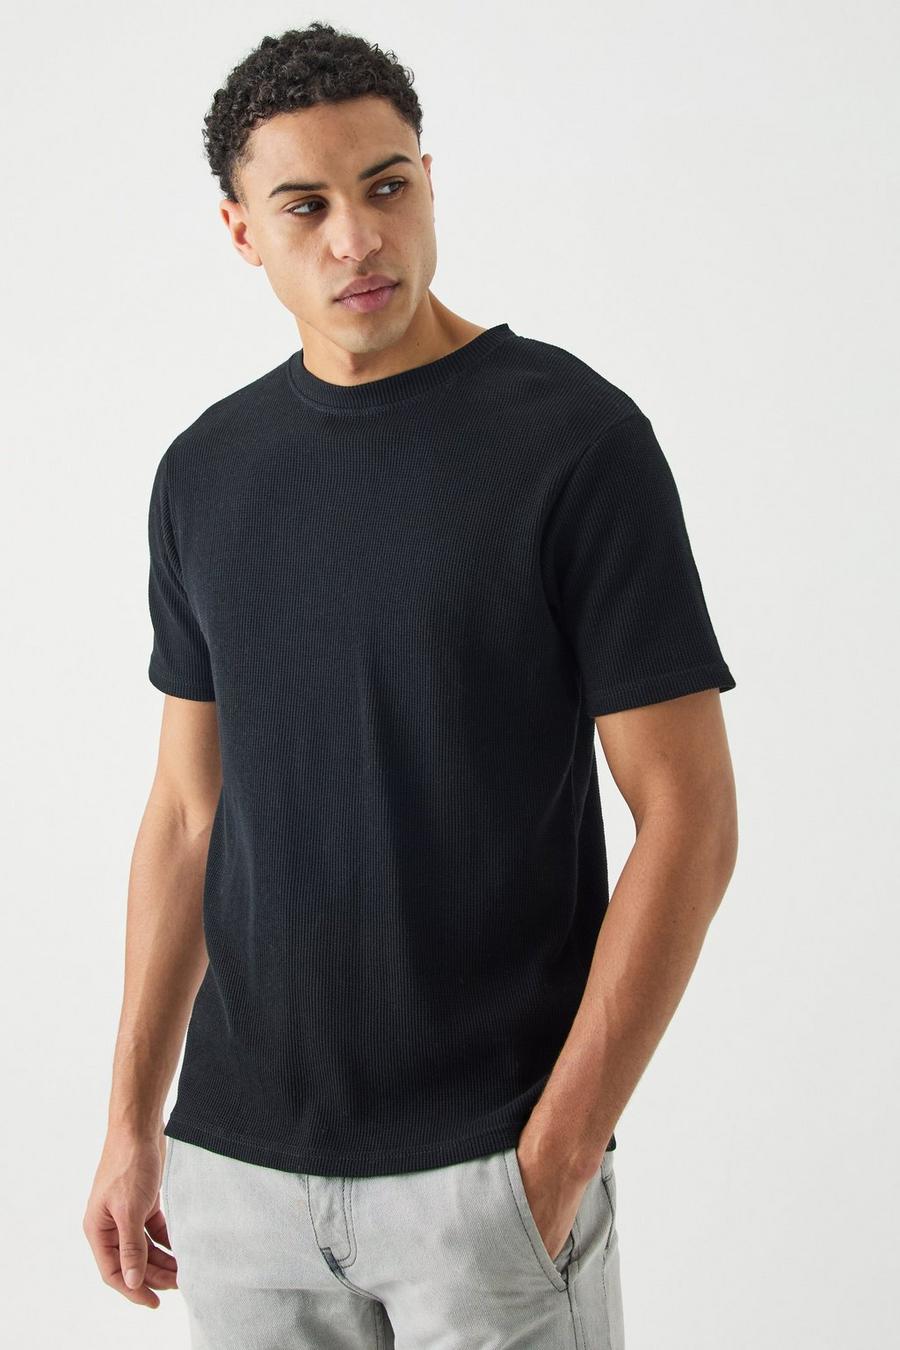 Black Wafel Gebreid Slim Fit T-Shirt